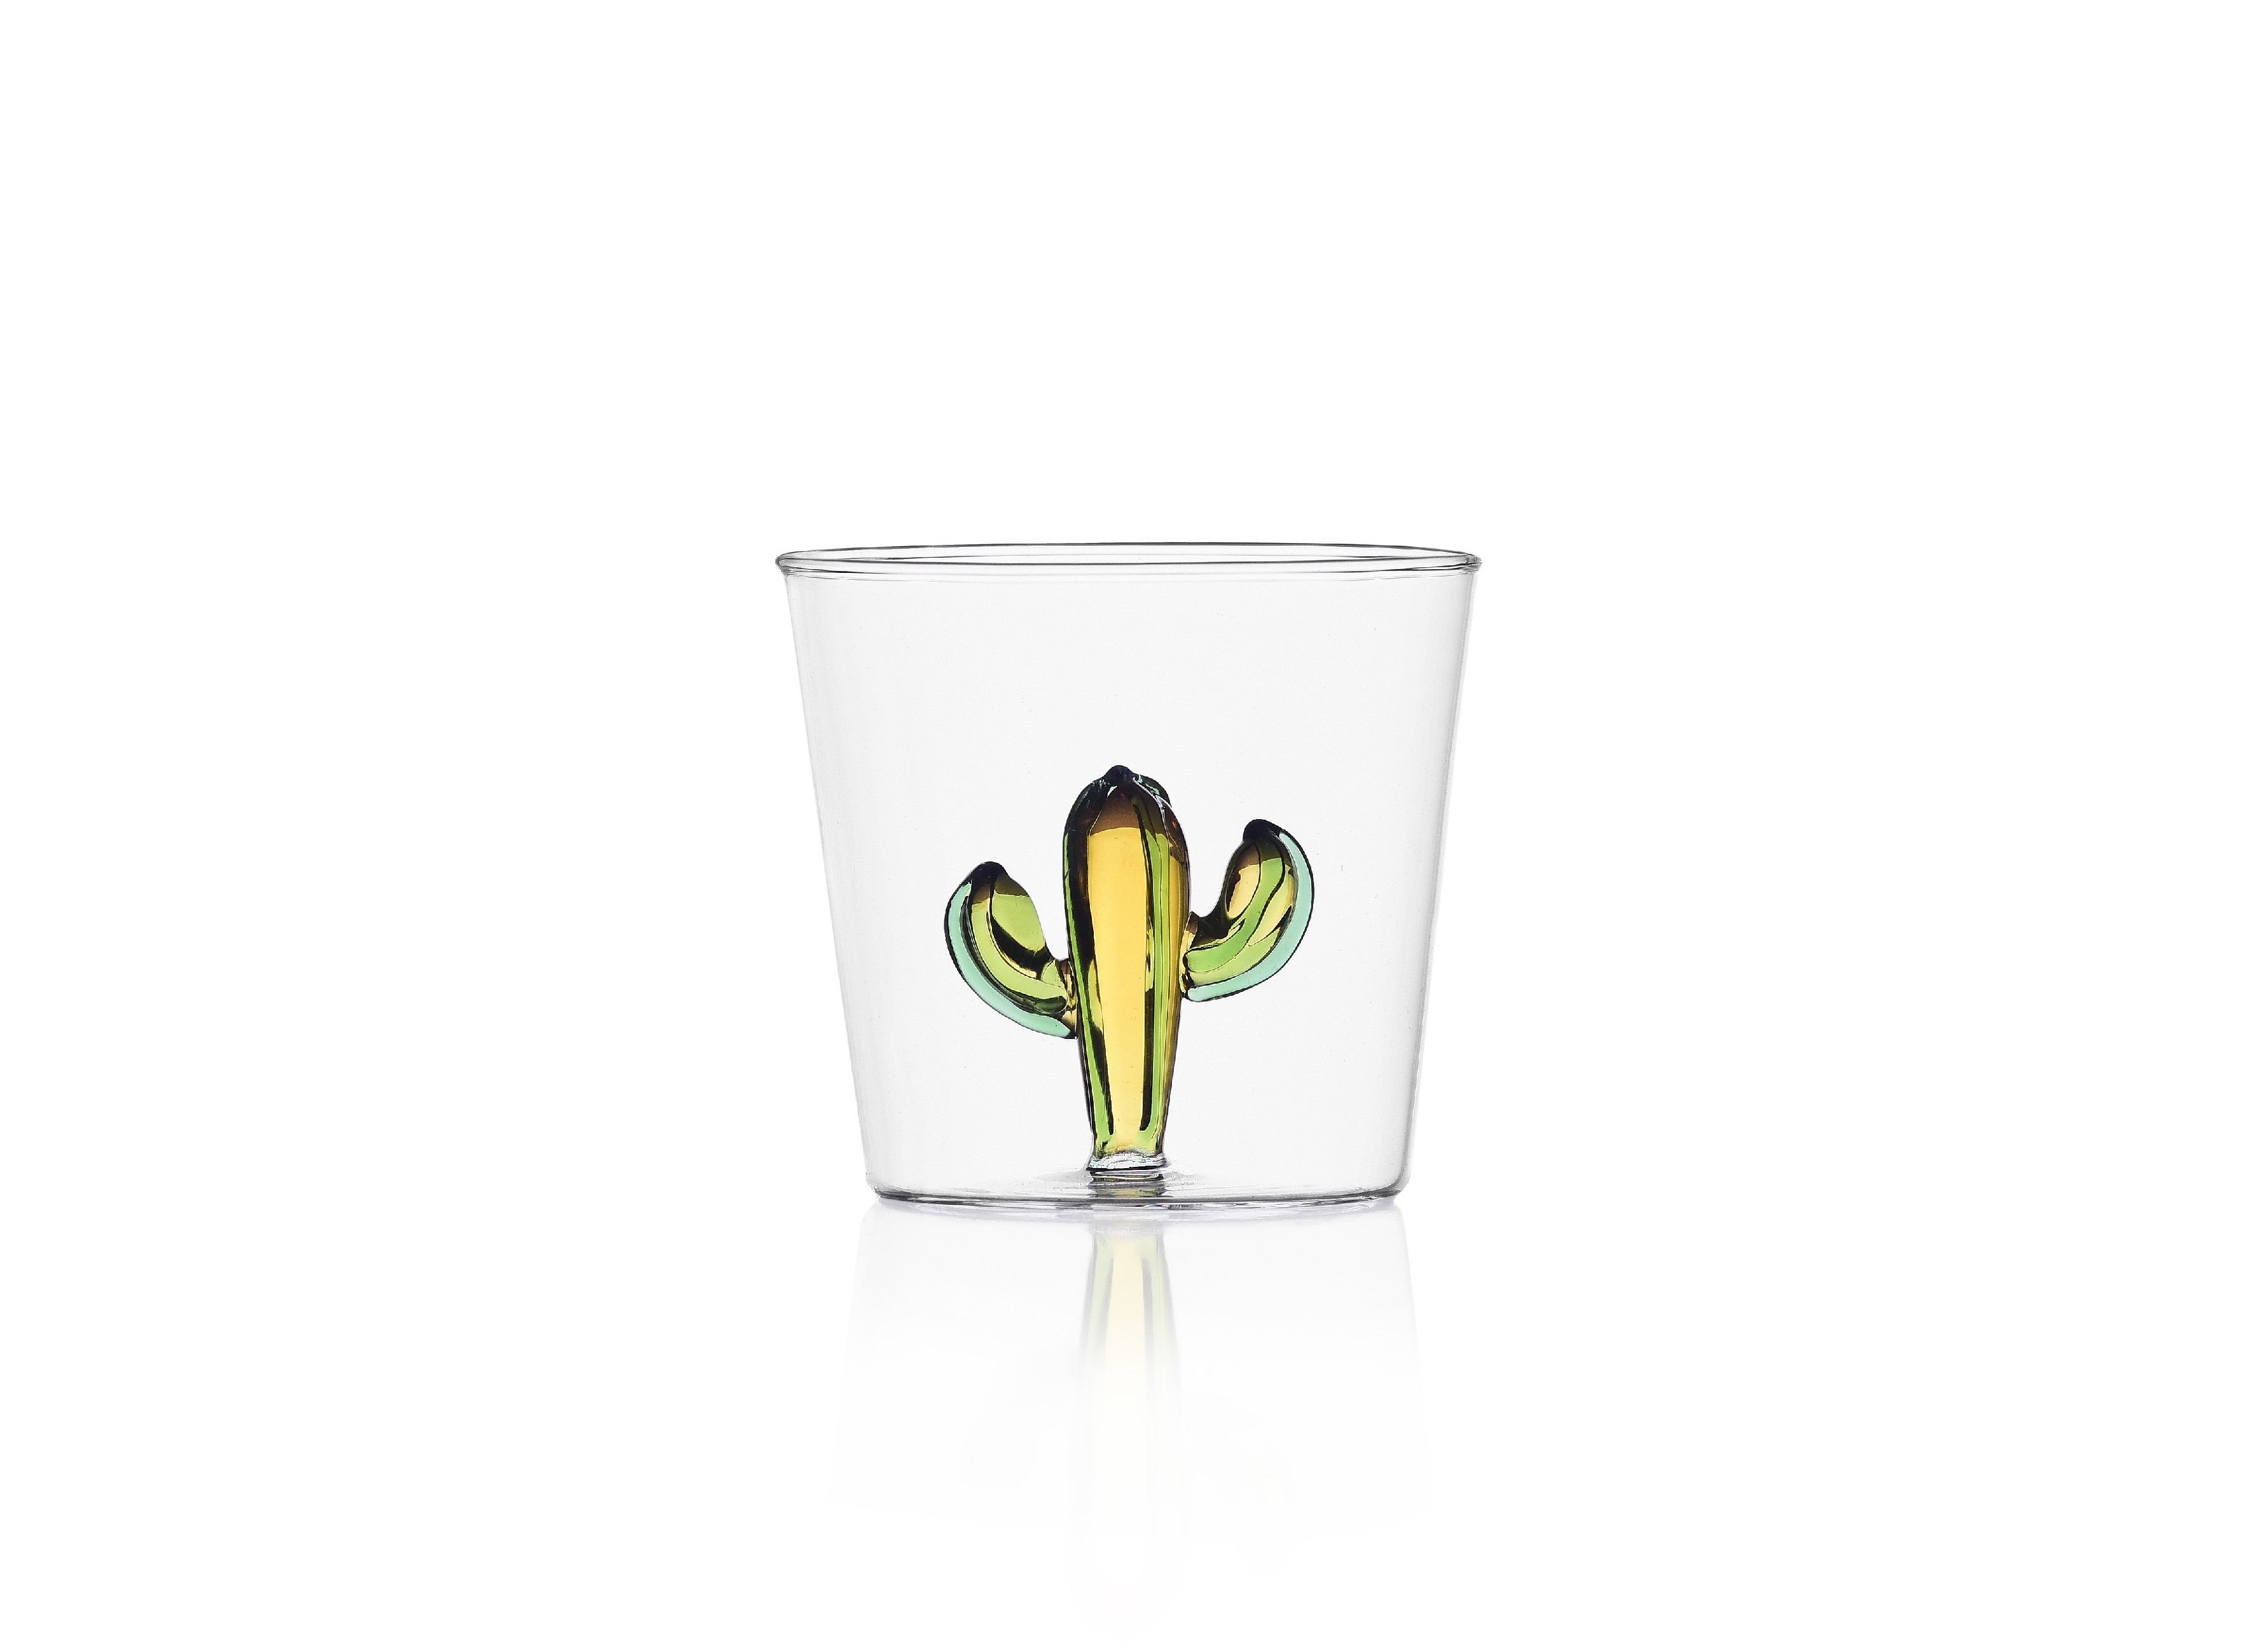 Ichendorf Desert Plants Set of 6 Cactus Decorated Water Glasses